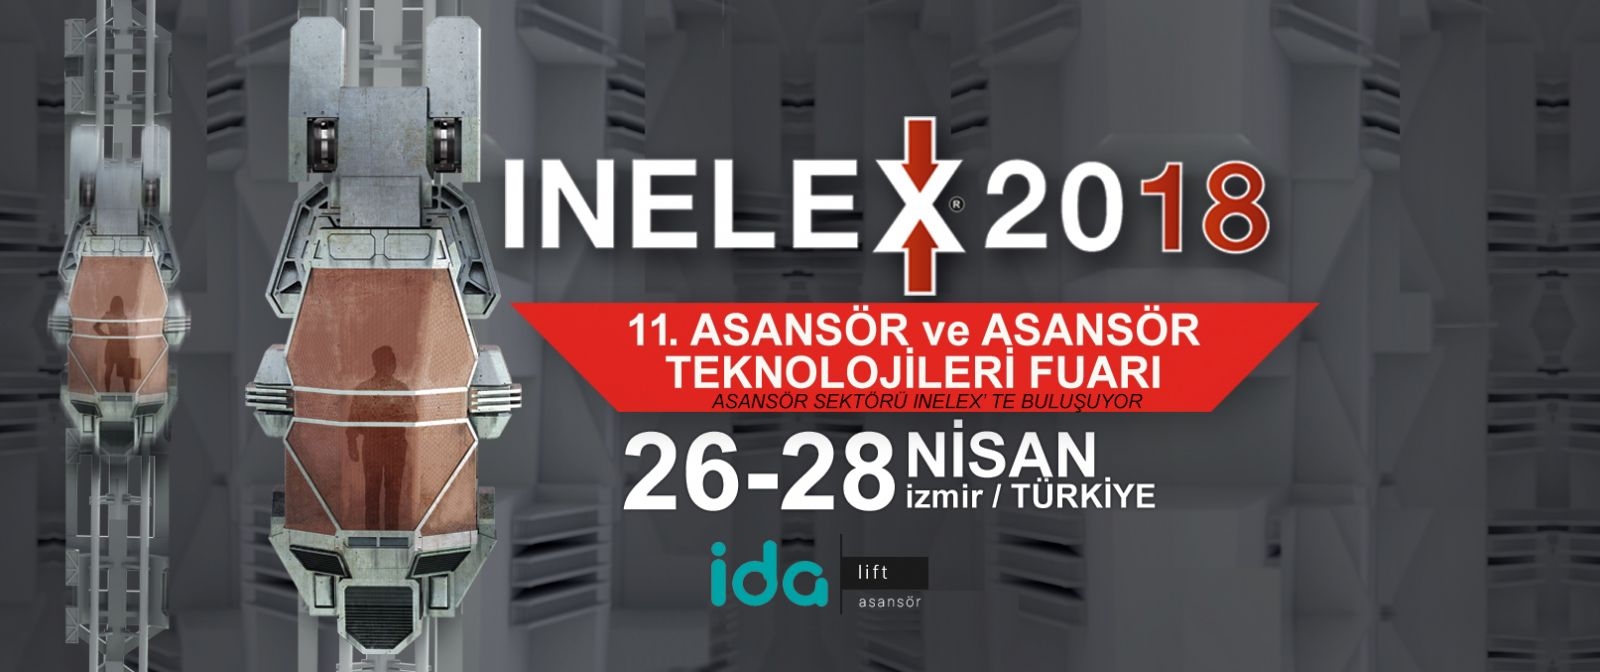 Inelex 2018 Elevator Fair